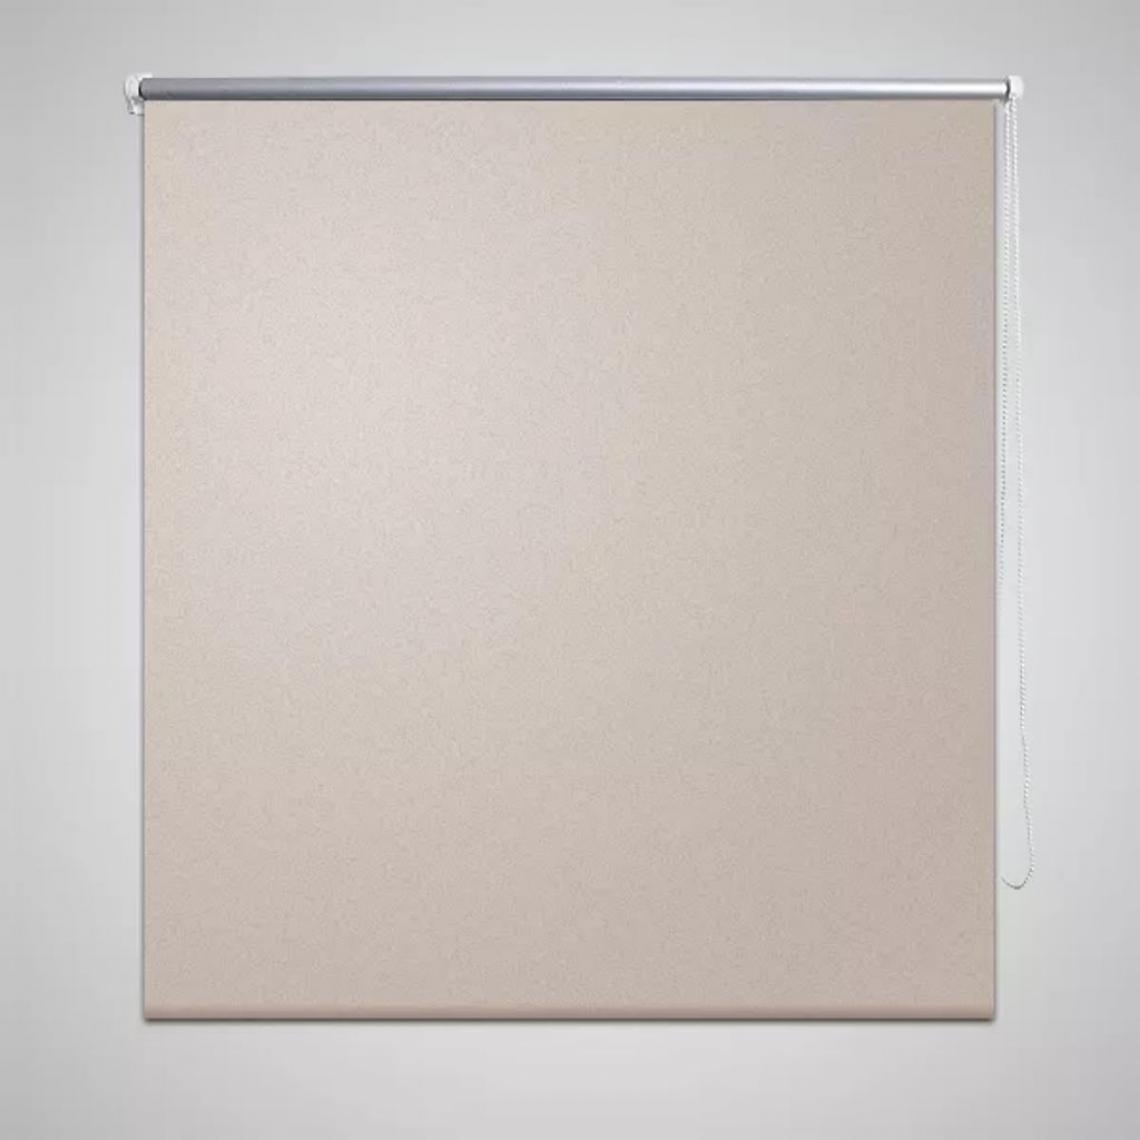 Hucoco - Store enrouleur occultant 160 x 175 cm beige - Beige - Store compatible Velux